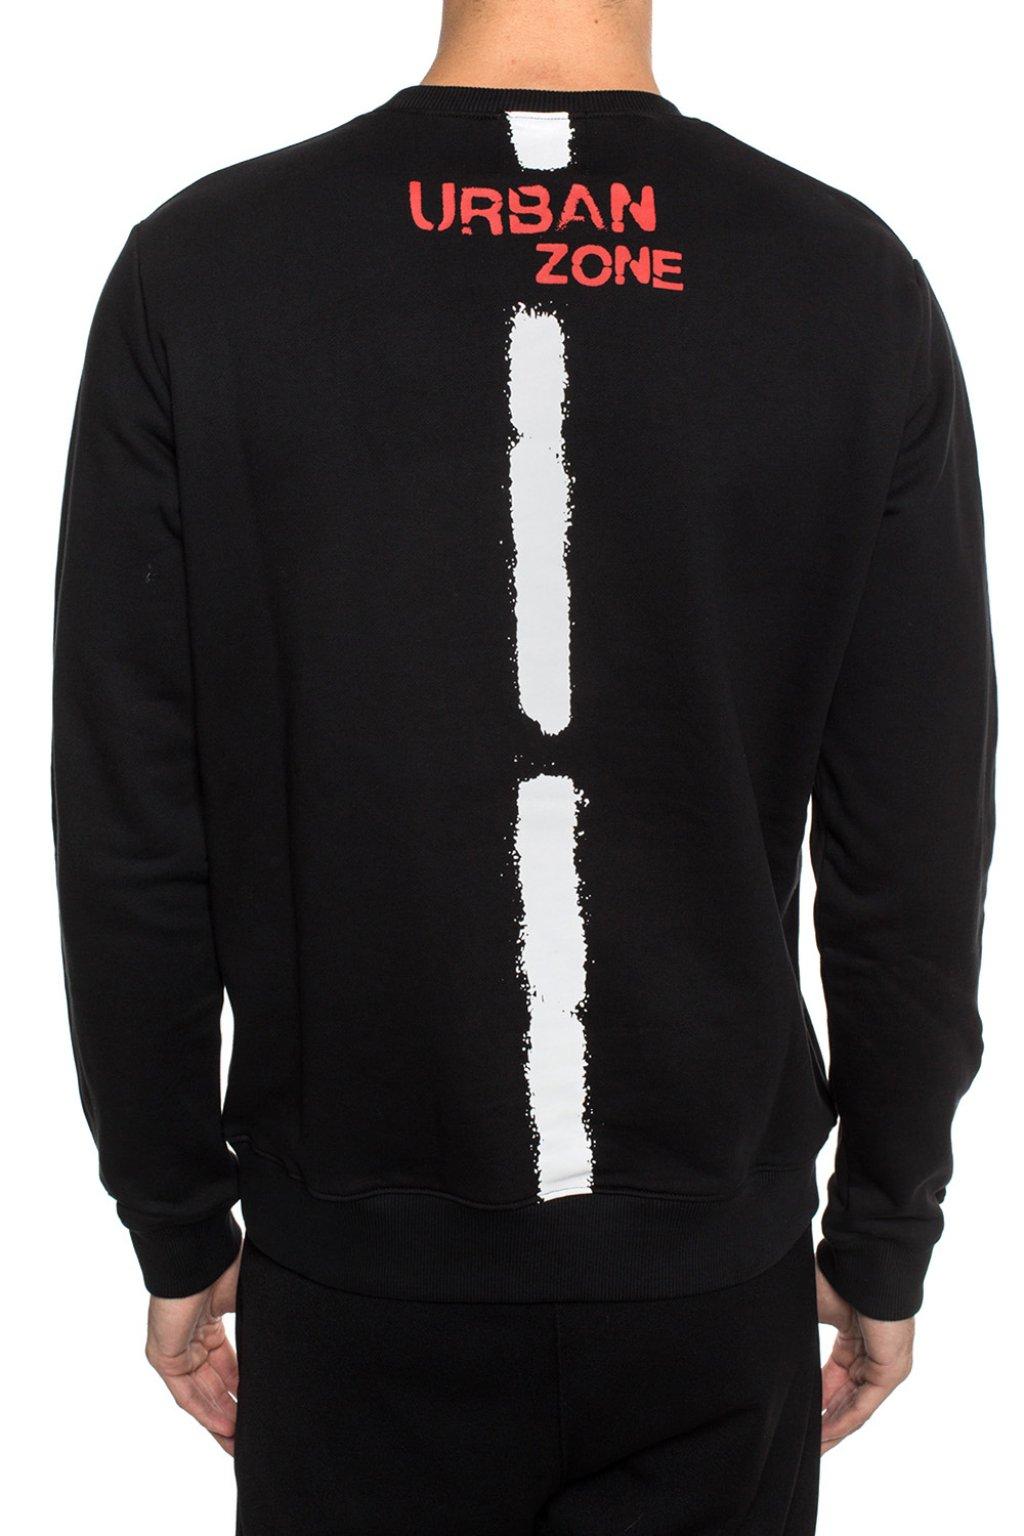 Les Hommes Cotton Logo-printed Sweatshirt in Black for Men - Lyst